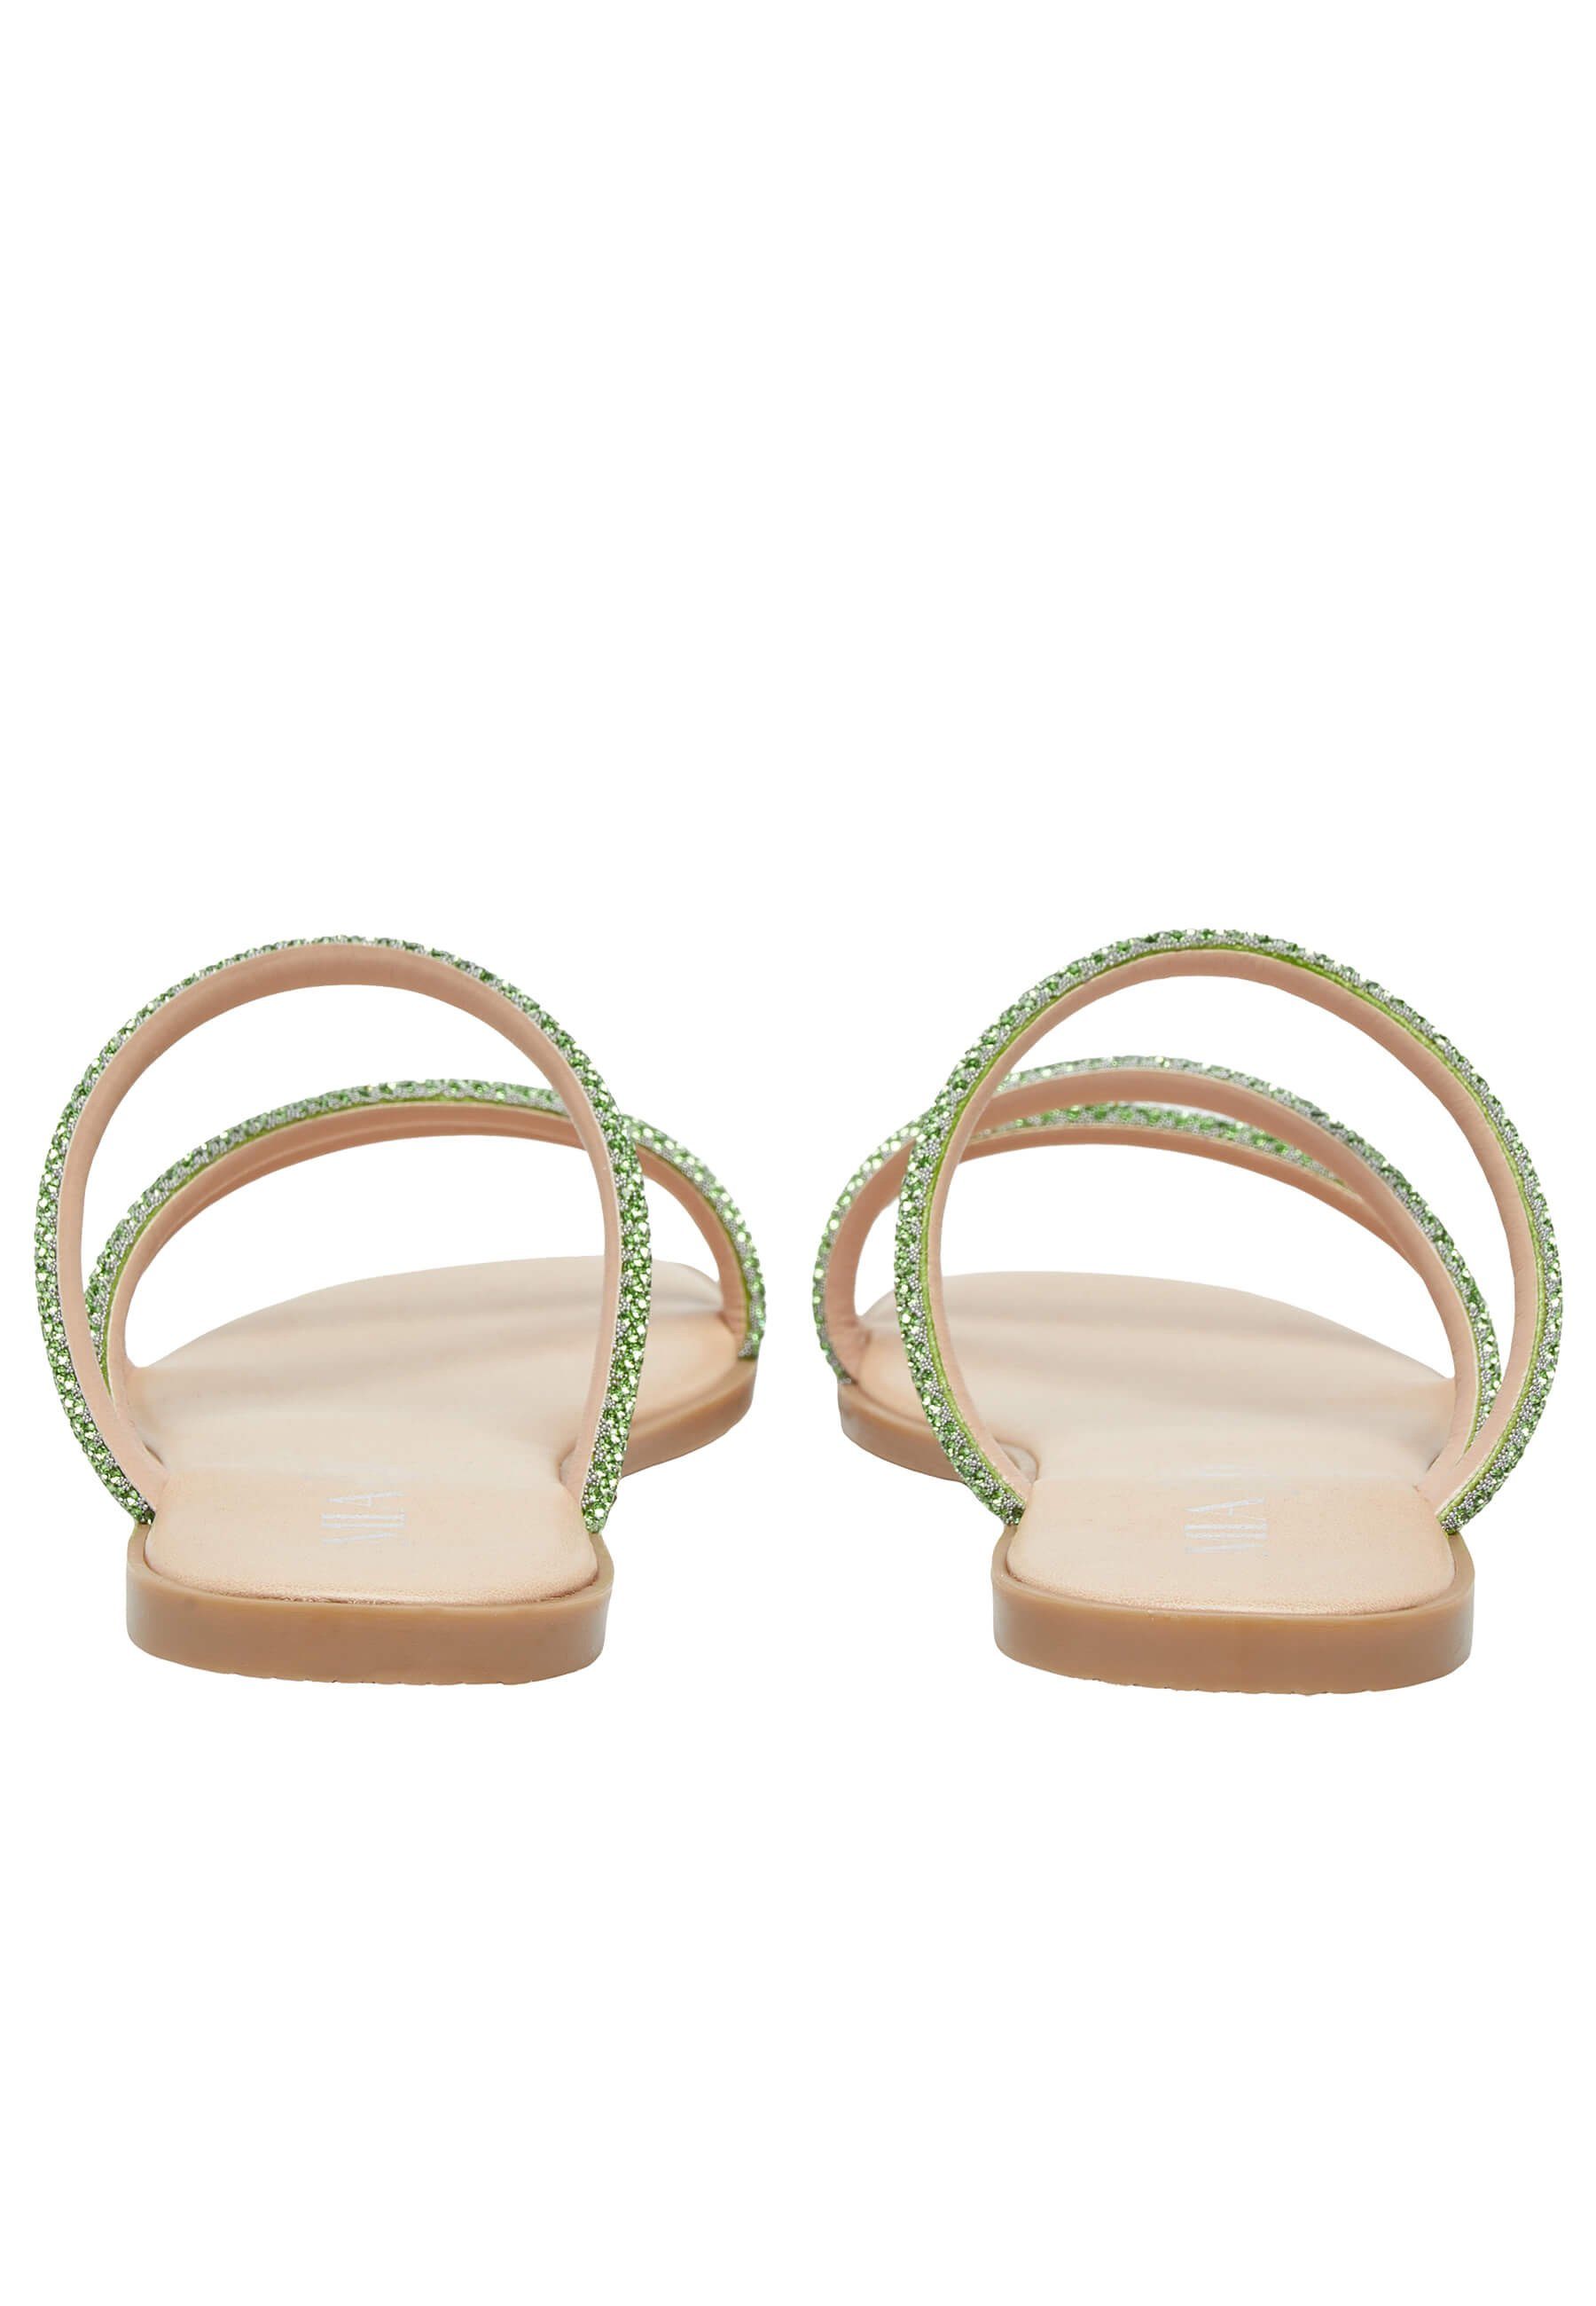 Sandale Design mia&jo Sandale mit modernem